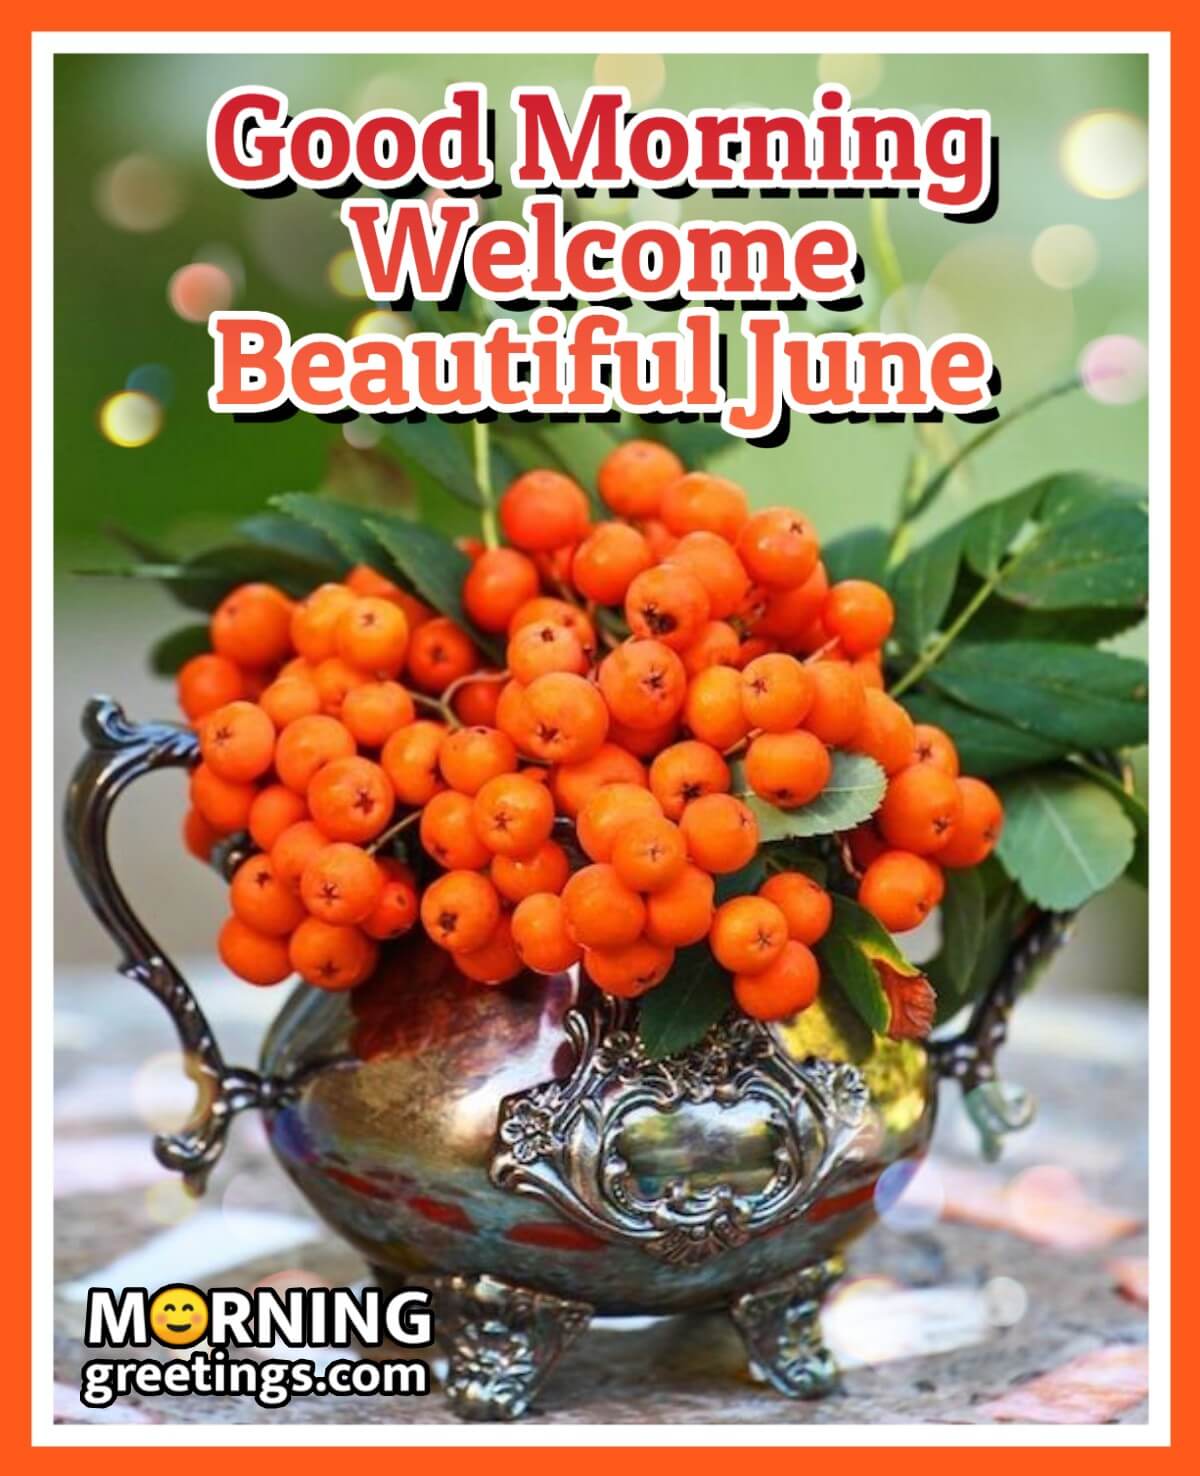 Good Morning Welcome Beautiful June